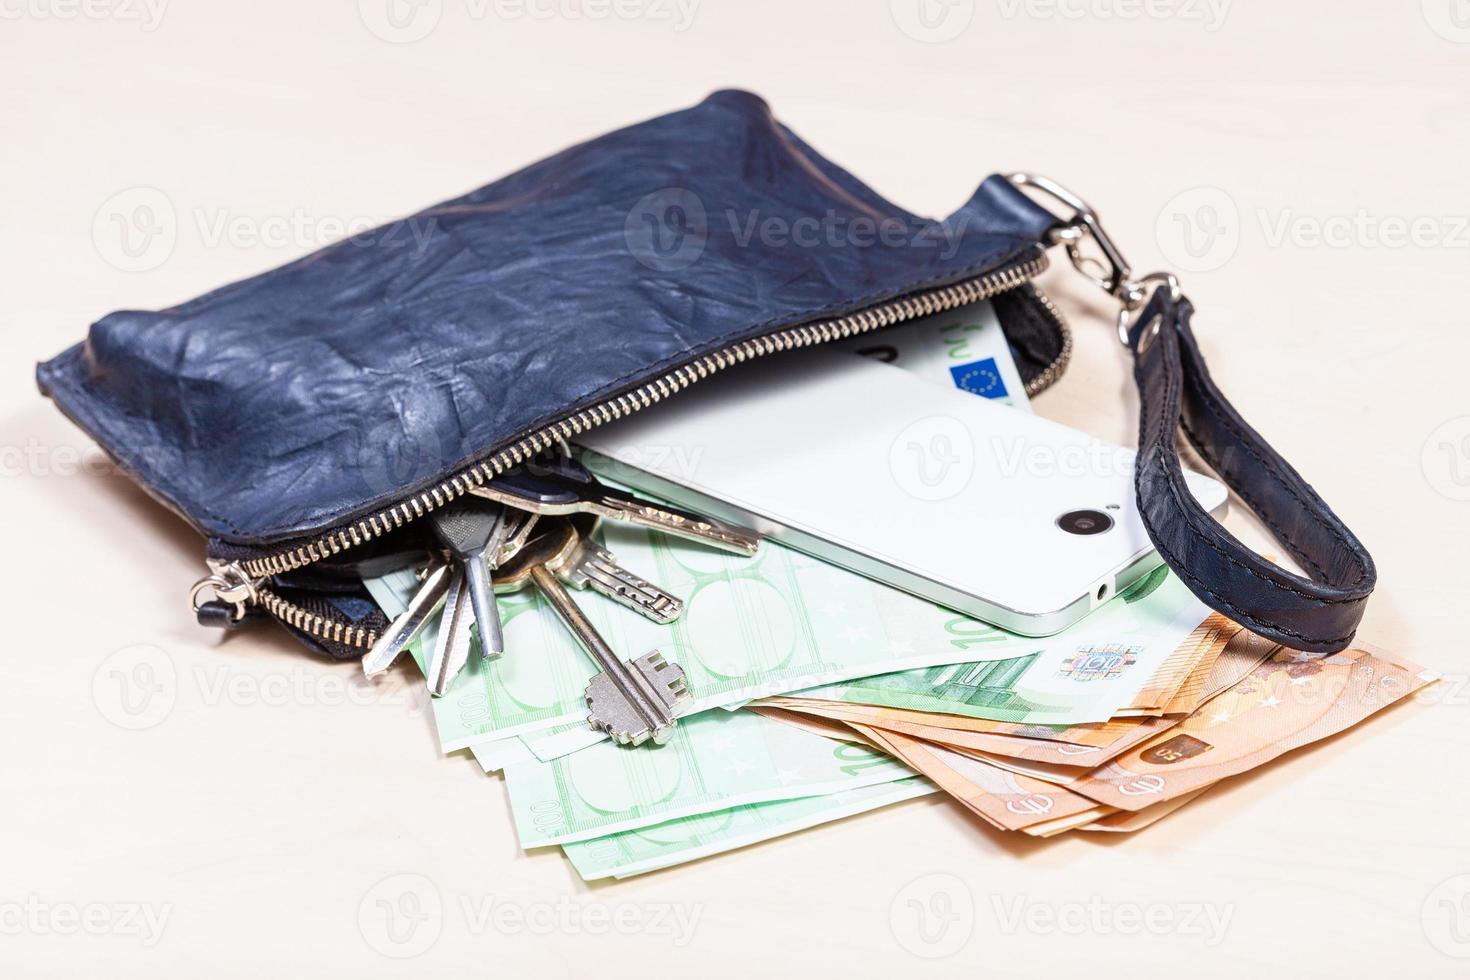 handbag with phone, keys and many euros on table photo